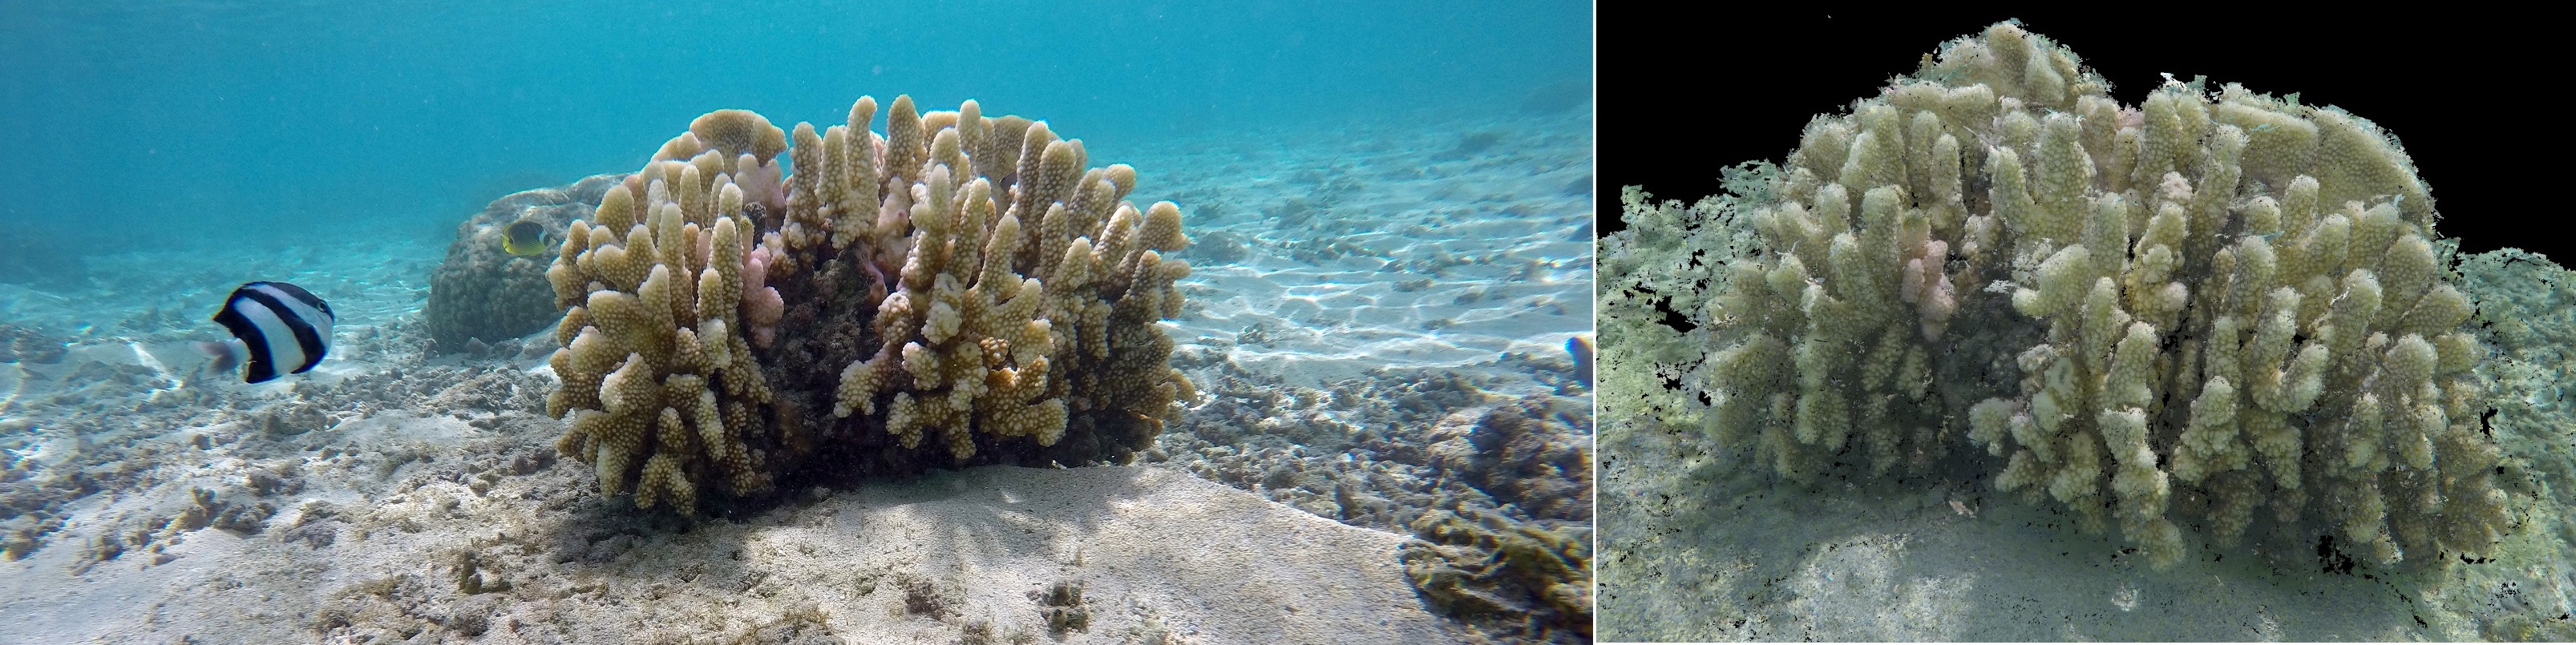 reef-check-la-reunion-pix4d-pix4dmapper-coral-environmental-mapping-combo